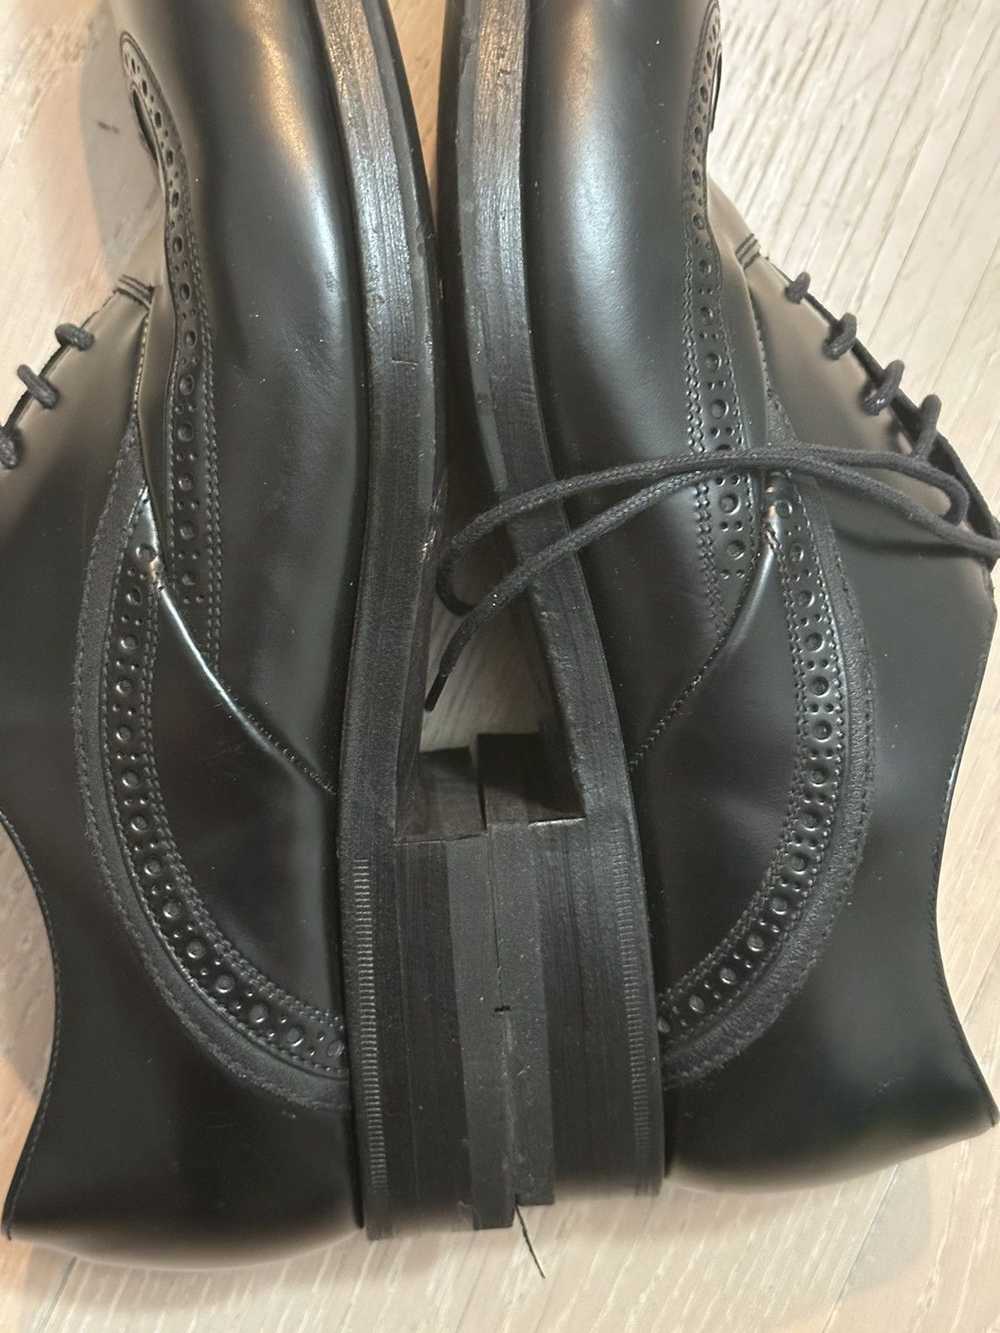 Prada Prada leather dress shoes sz 7 - image 9